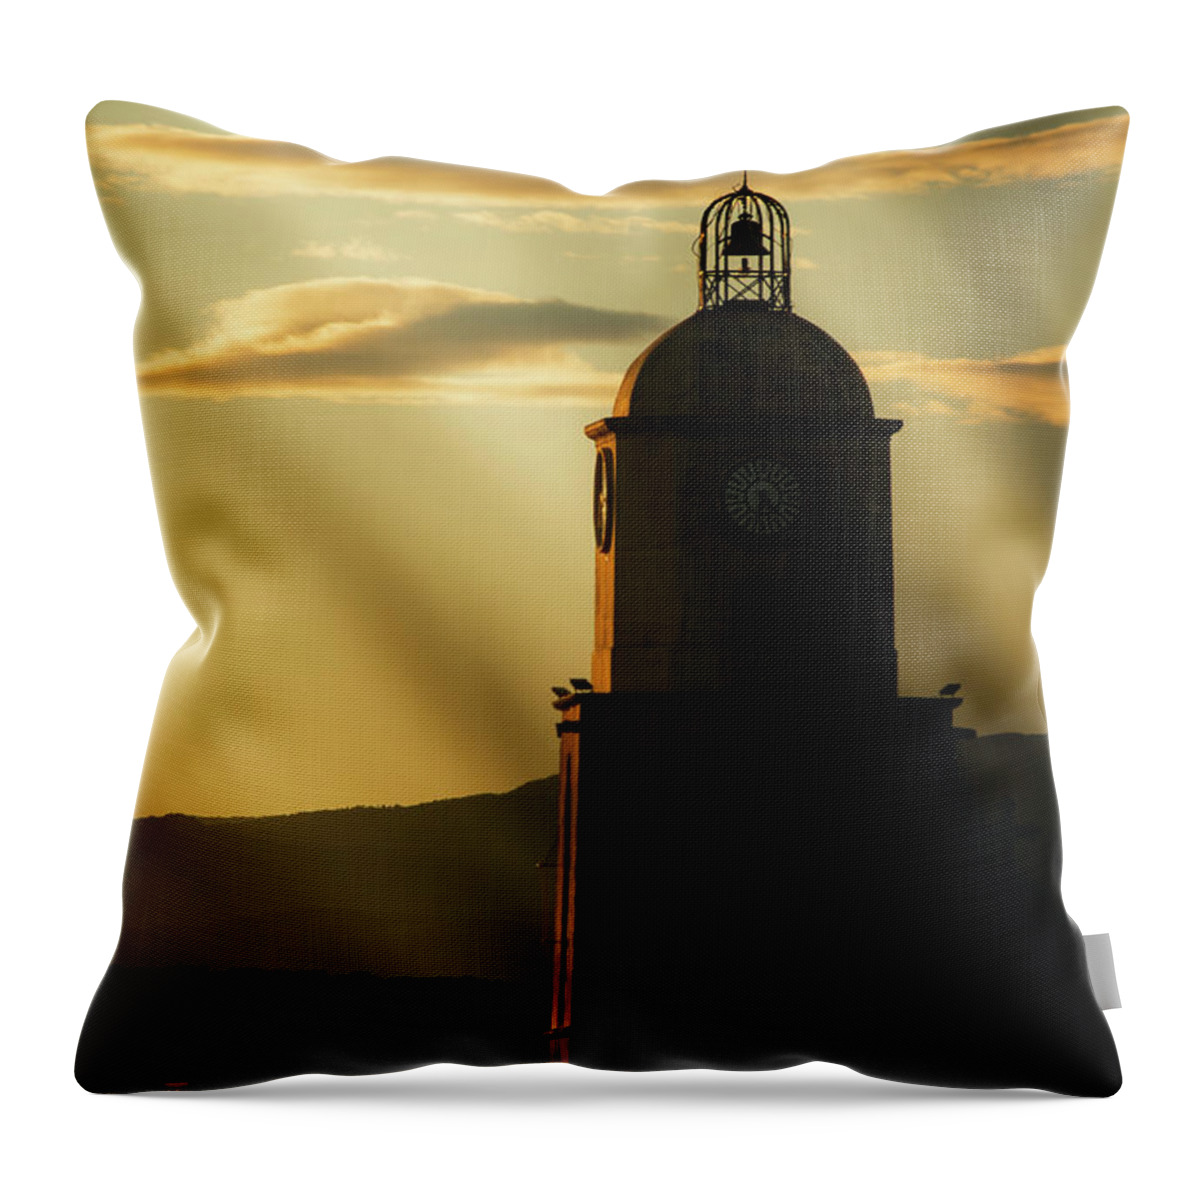 Saint-tropez Throw Pillow featuring the photograph Saint-Tropez sunset by Worldwide Photography